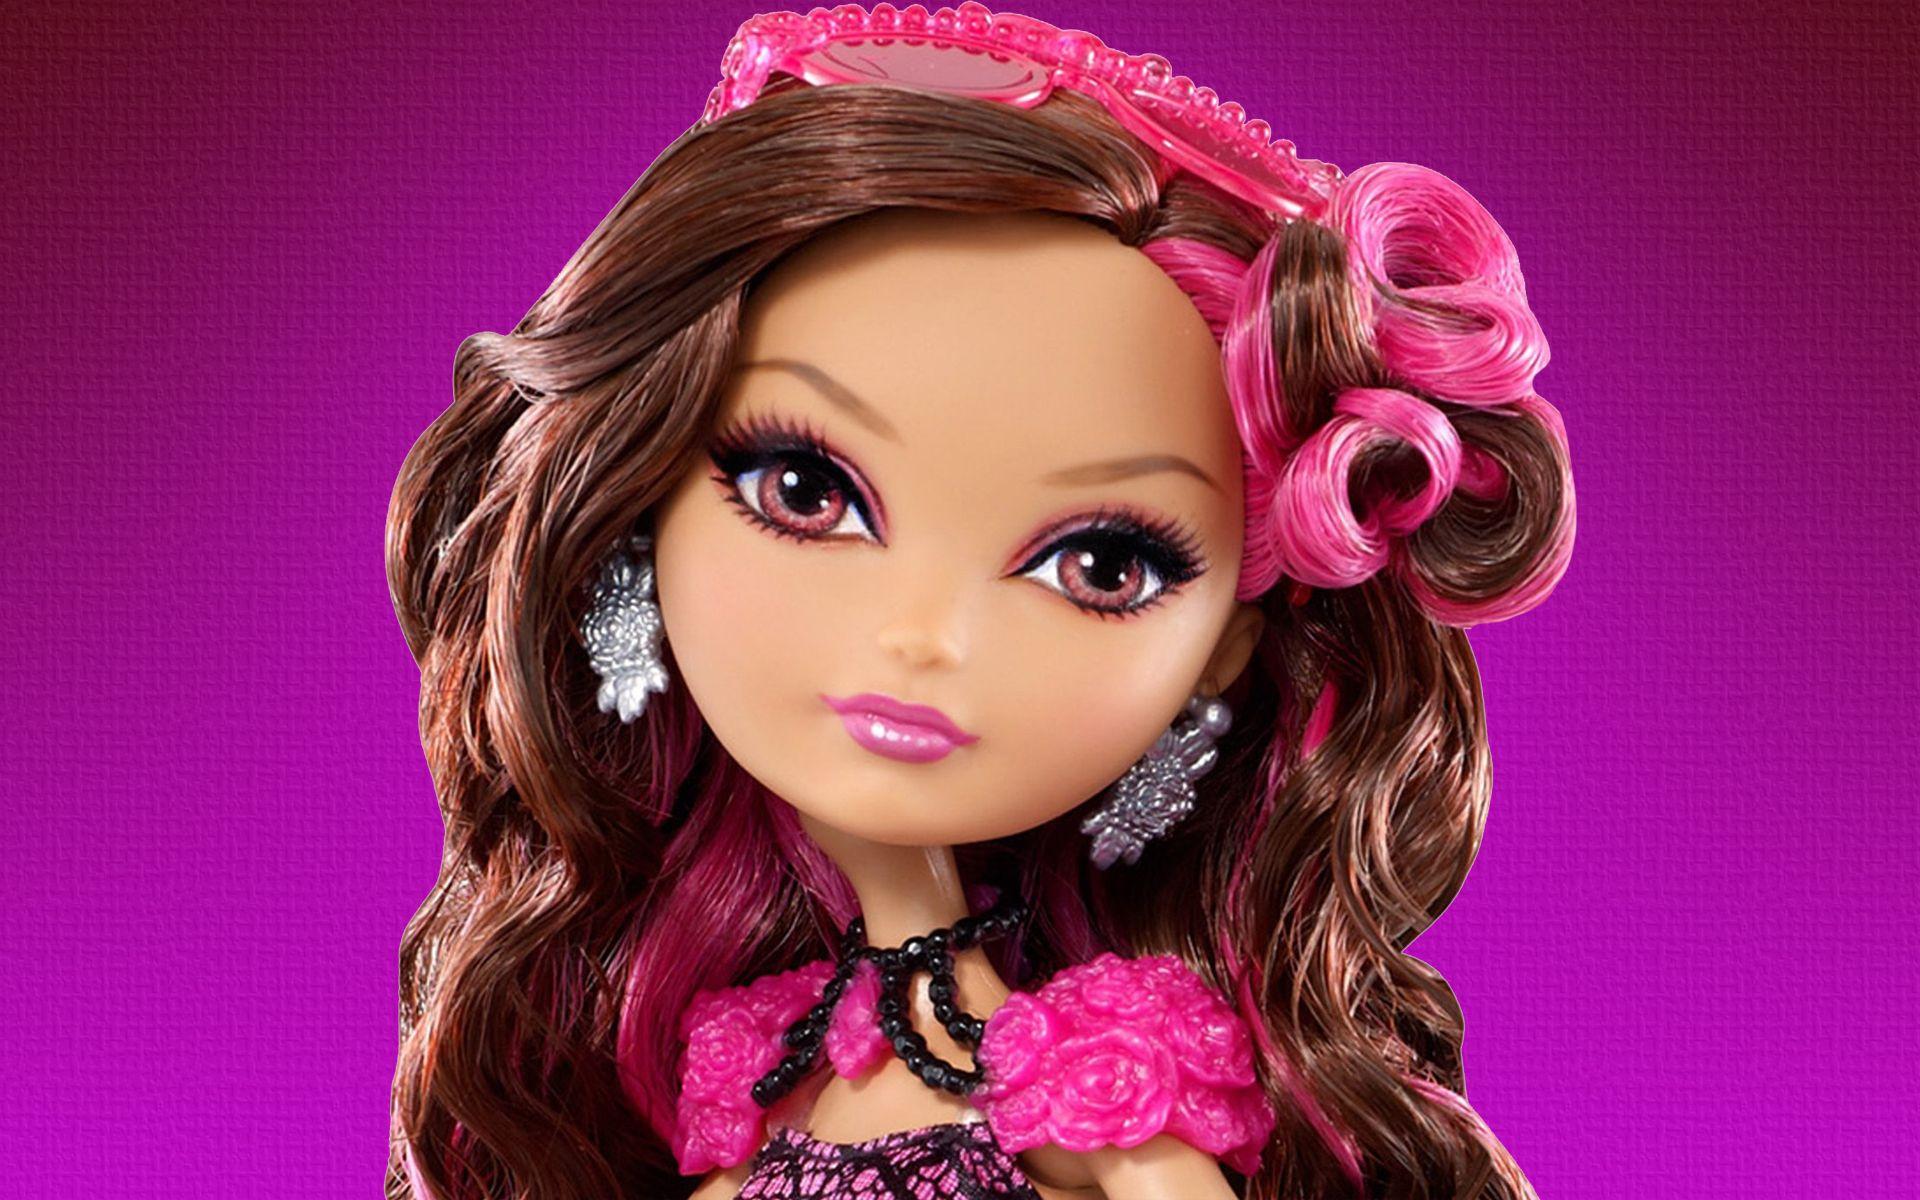 Cute And Beautiful Barbie Doll Wallpaper